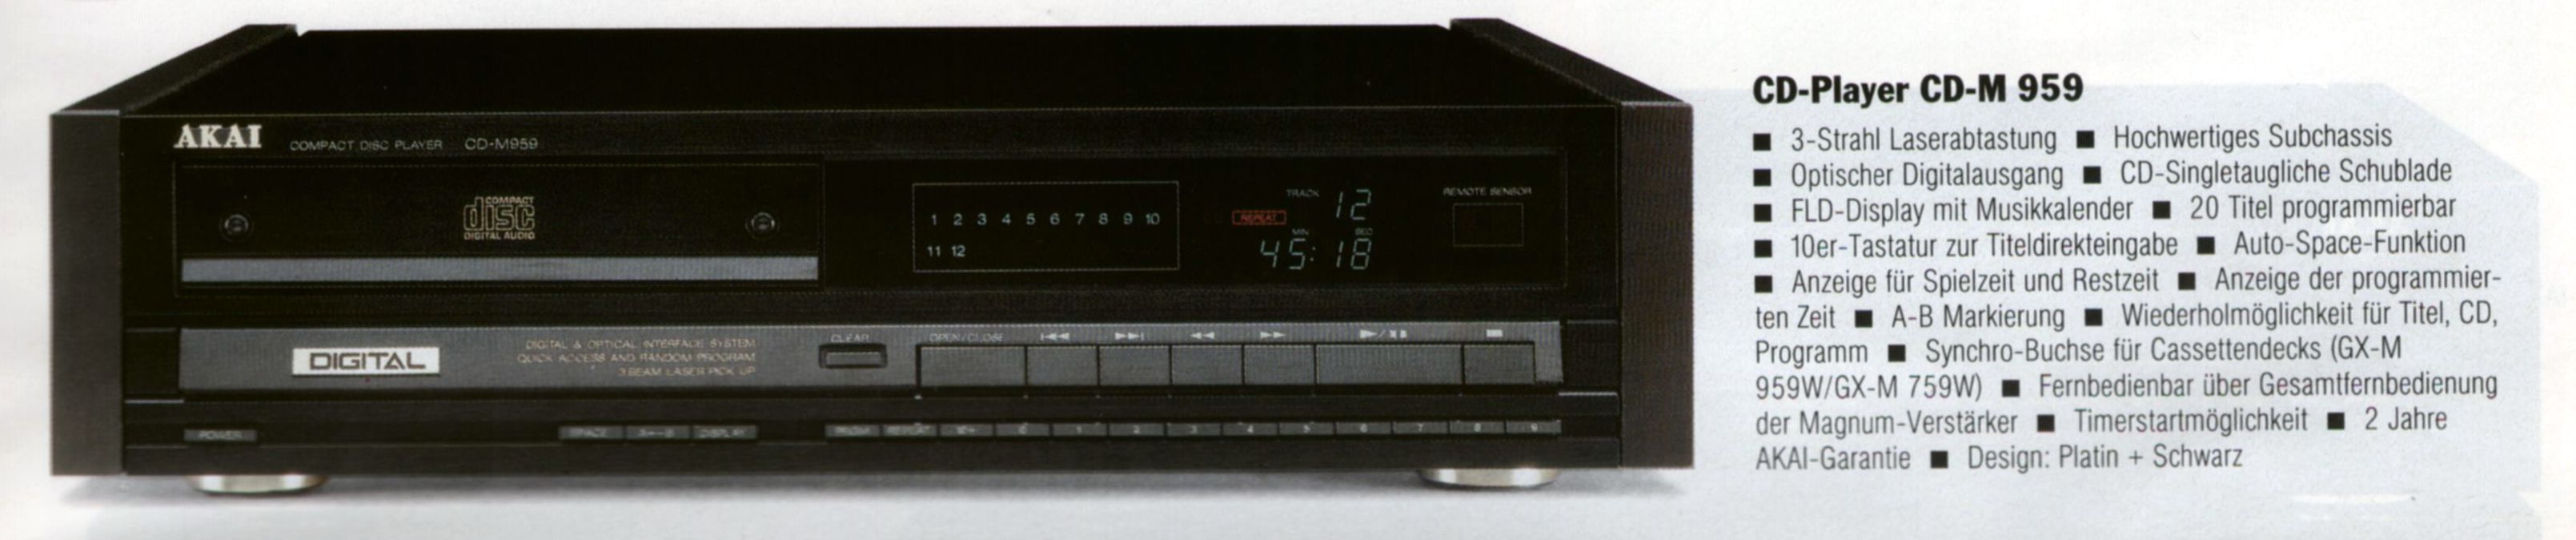 Akai CD-M 959-Prospekt-1989.jpg